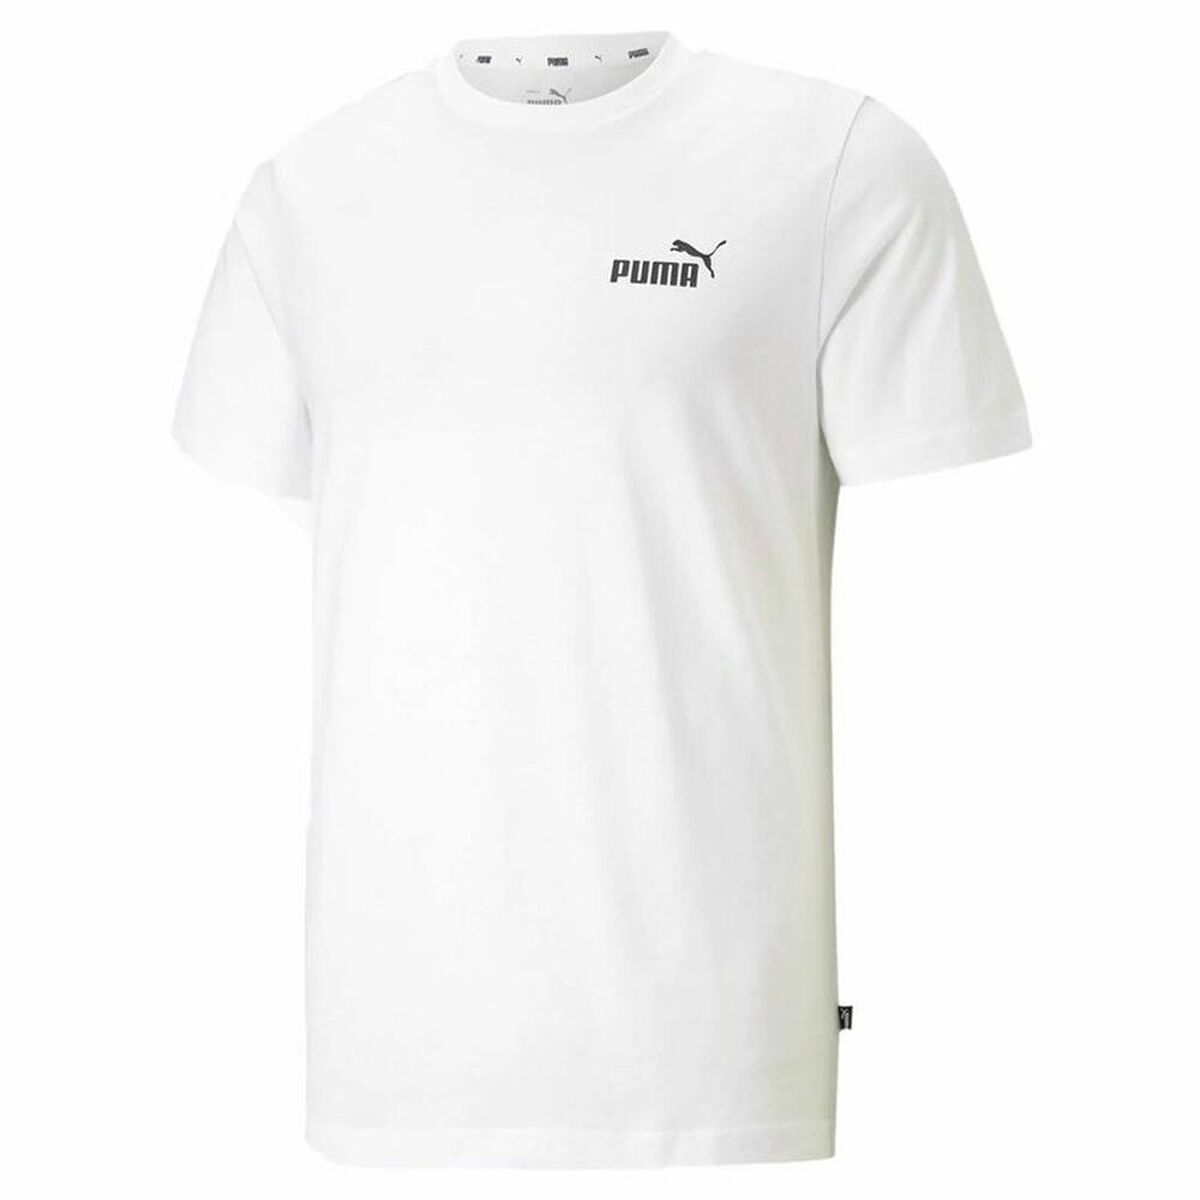 T-shirt à manches courtes homme Puma Essentials Small Logo Blanc - Puma - Jardin D'Eyden - jardindeyden.fr